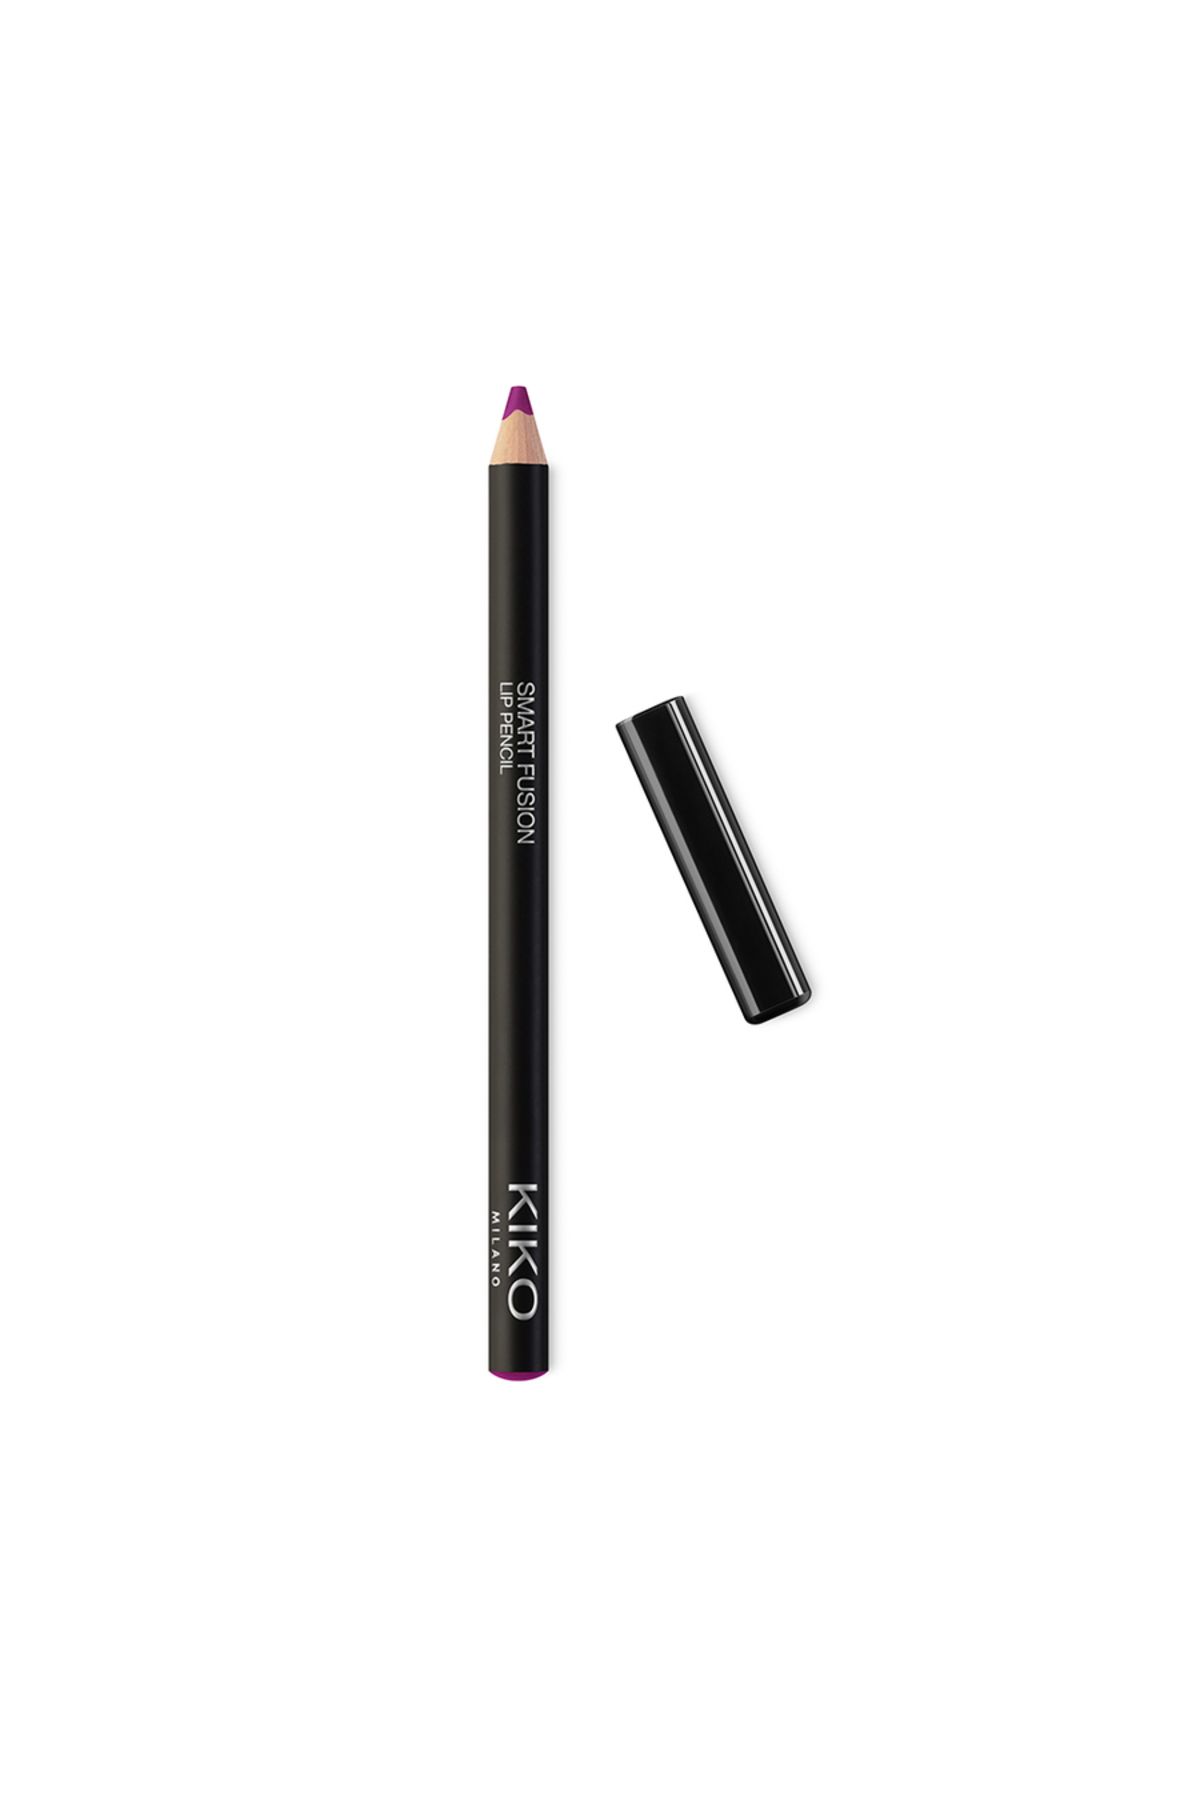 KIKO DUDAK KALEMİ - Smart Fusion Lip Pencil - 525 Deep Violet